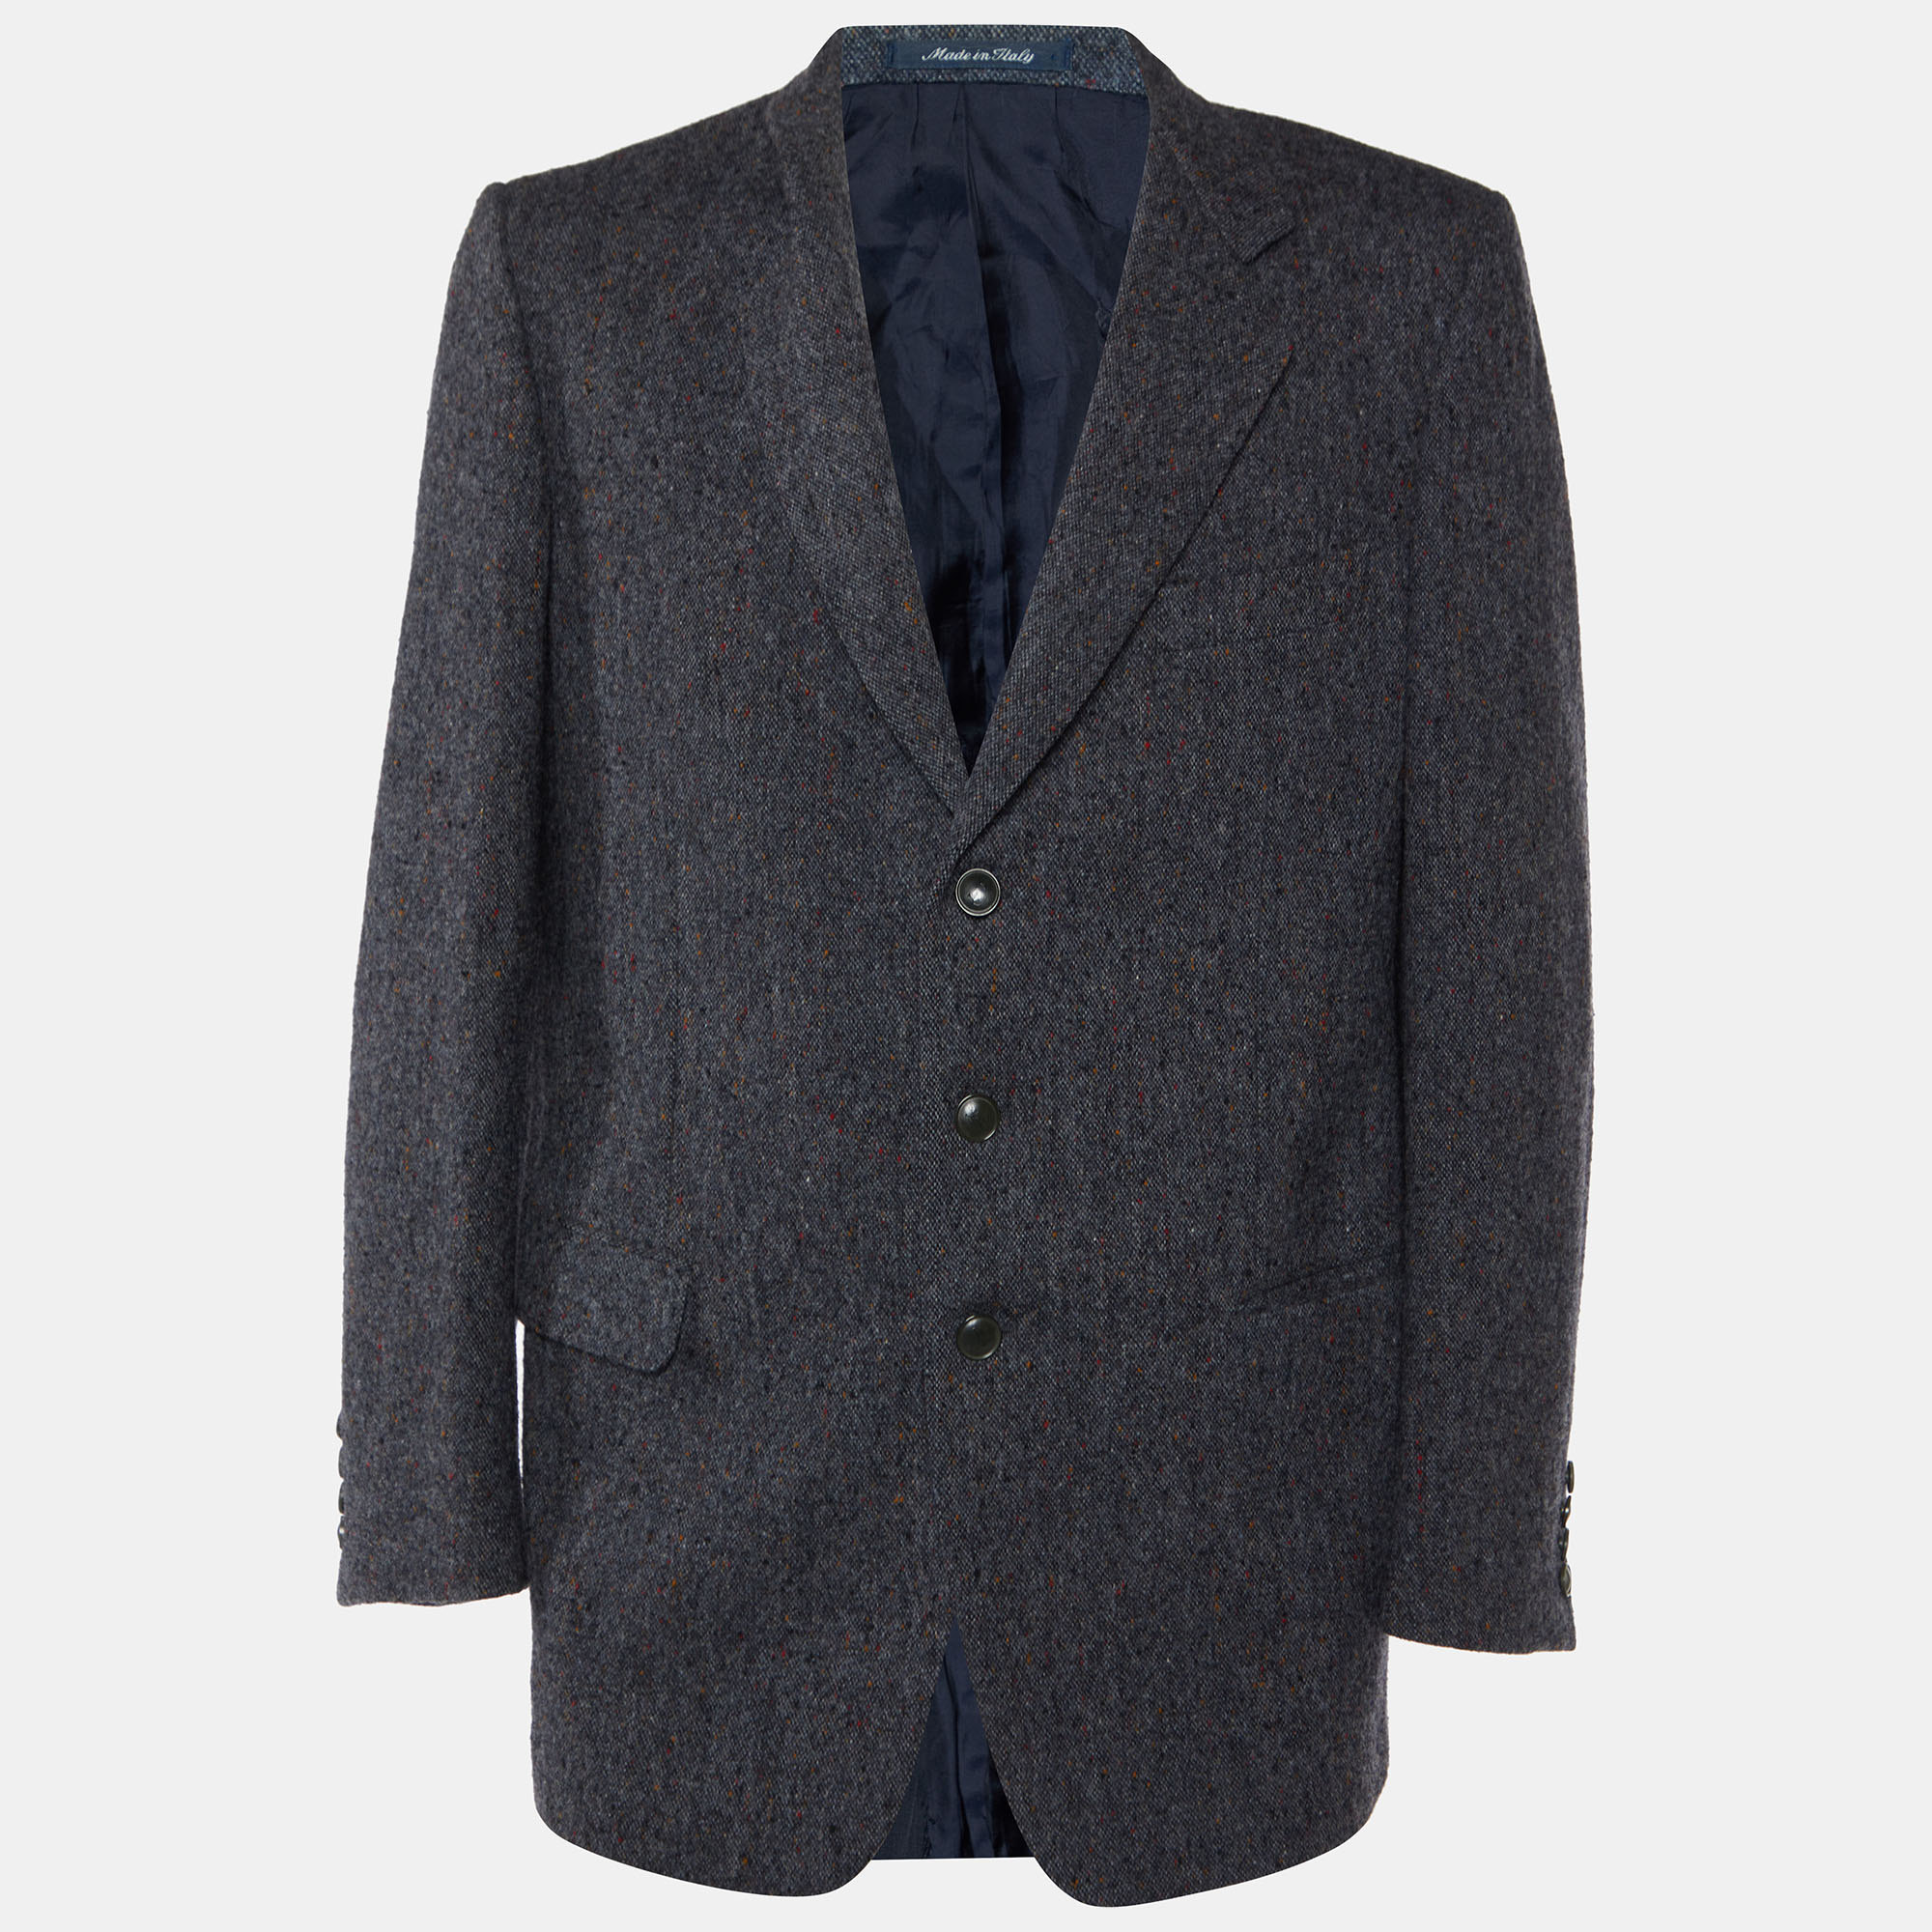 Yves saint laurent homme vintage grey wool button front jacket xxl